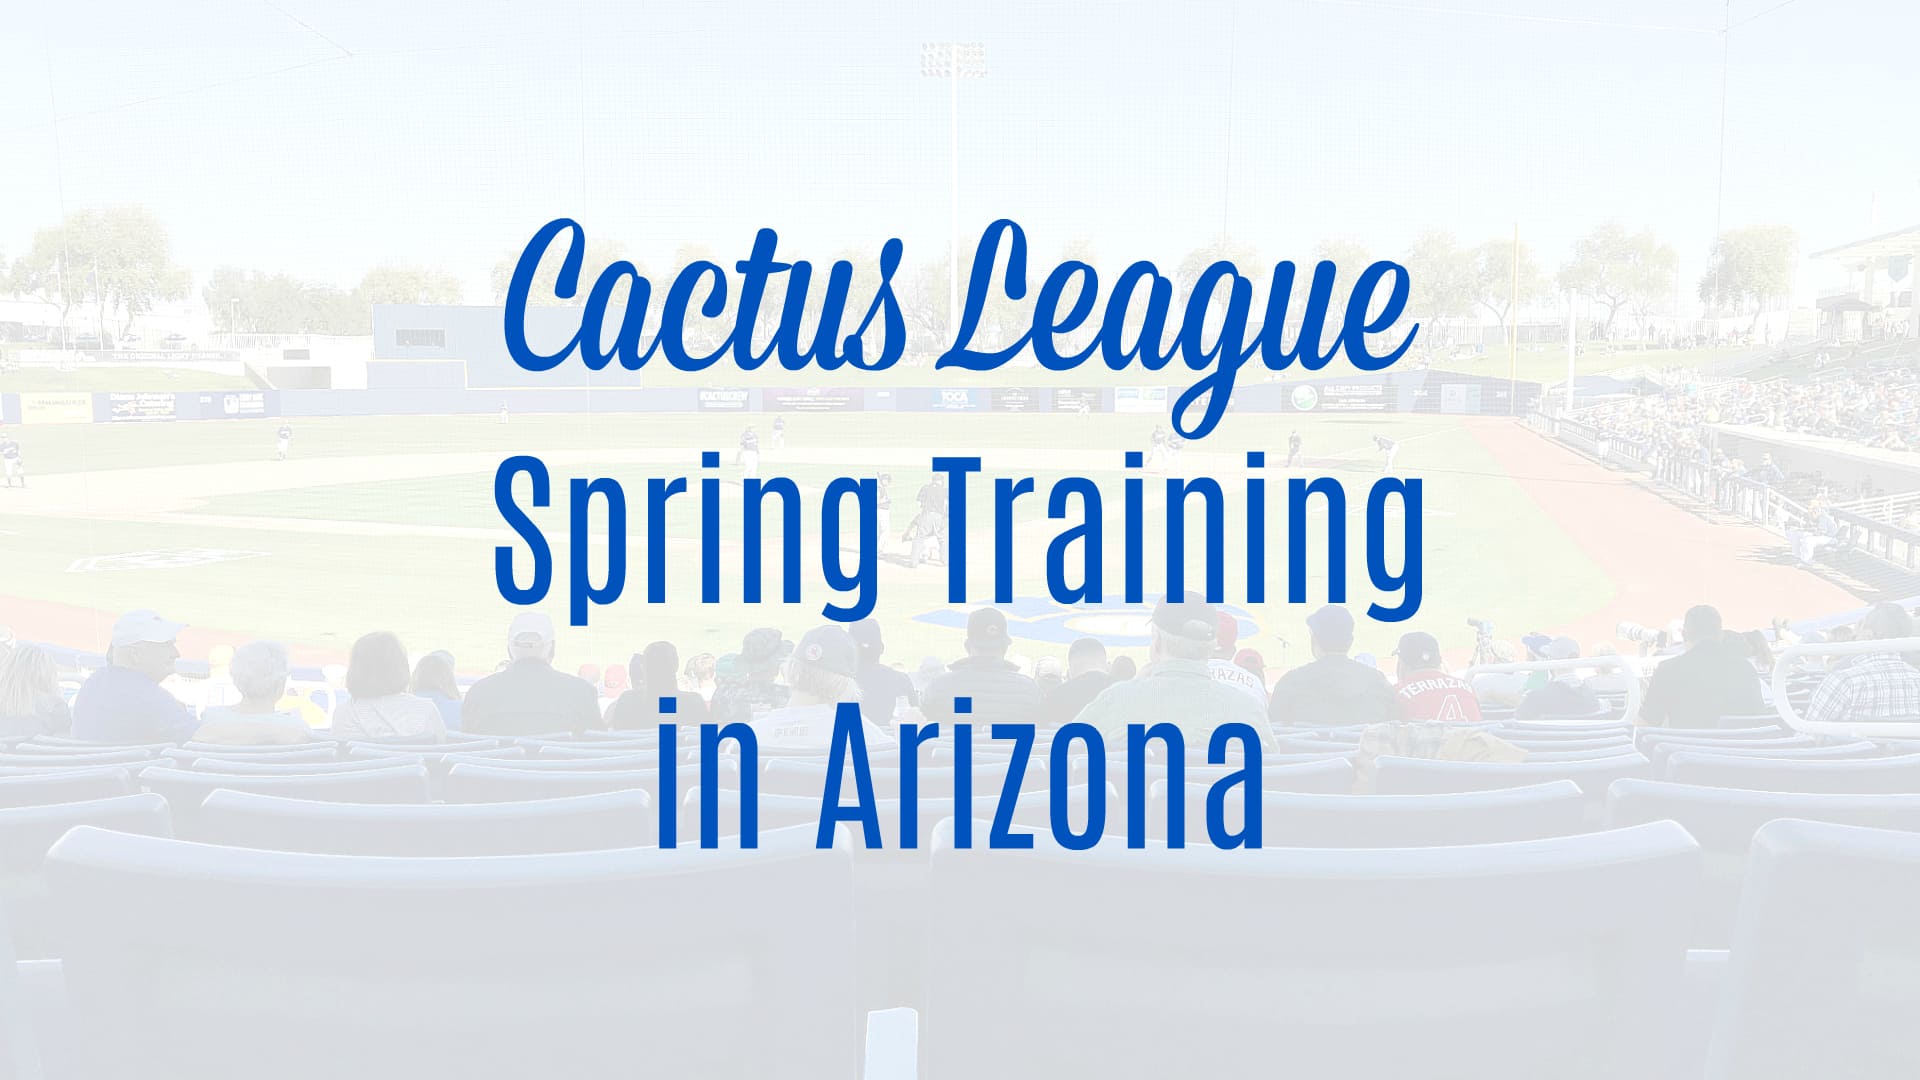 Eric Sim visits various Arizona Spring Training facilities. He